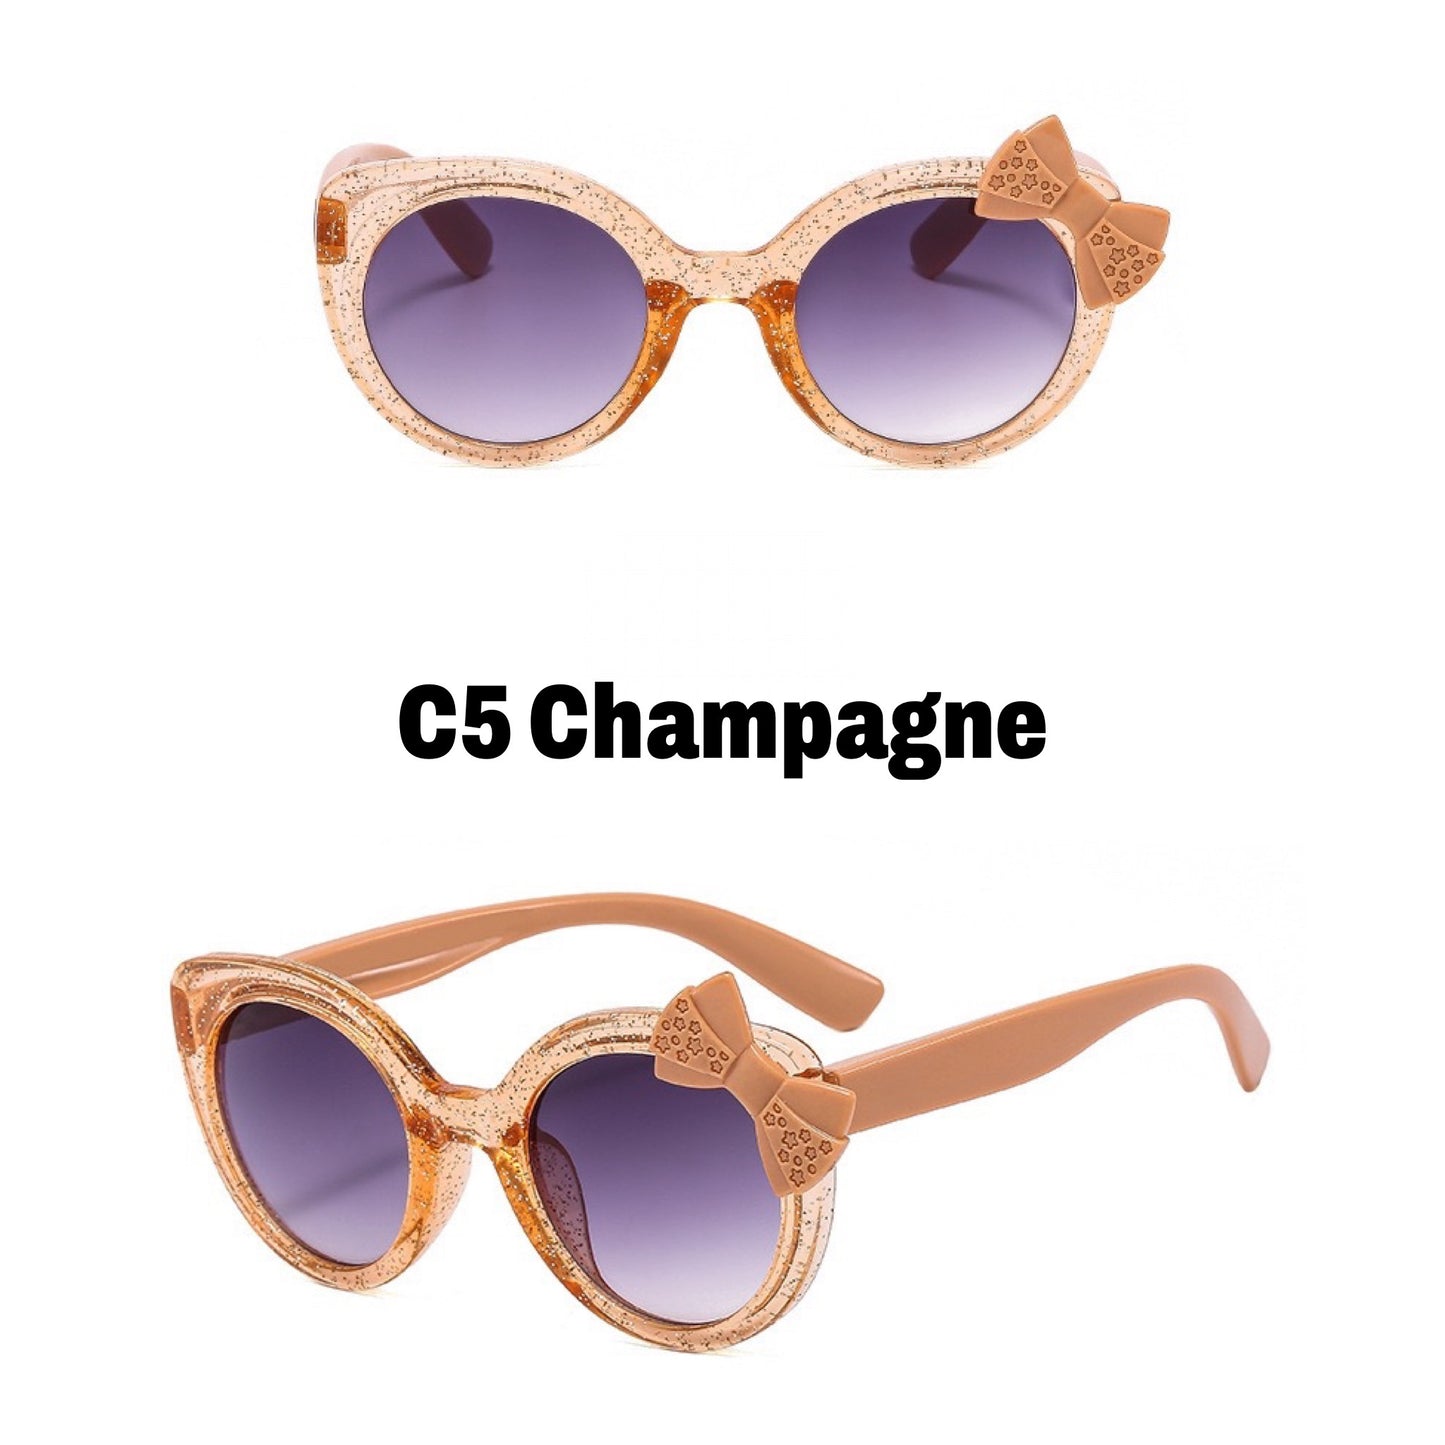 Put a Bow on it Glitter Shades | Pet Fashion Sunglasses